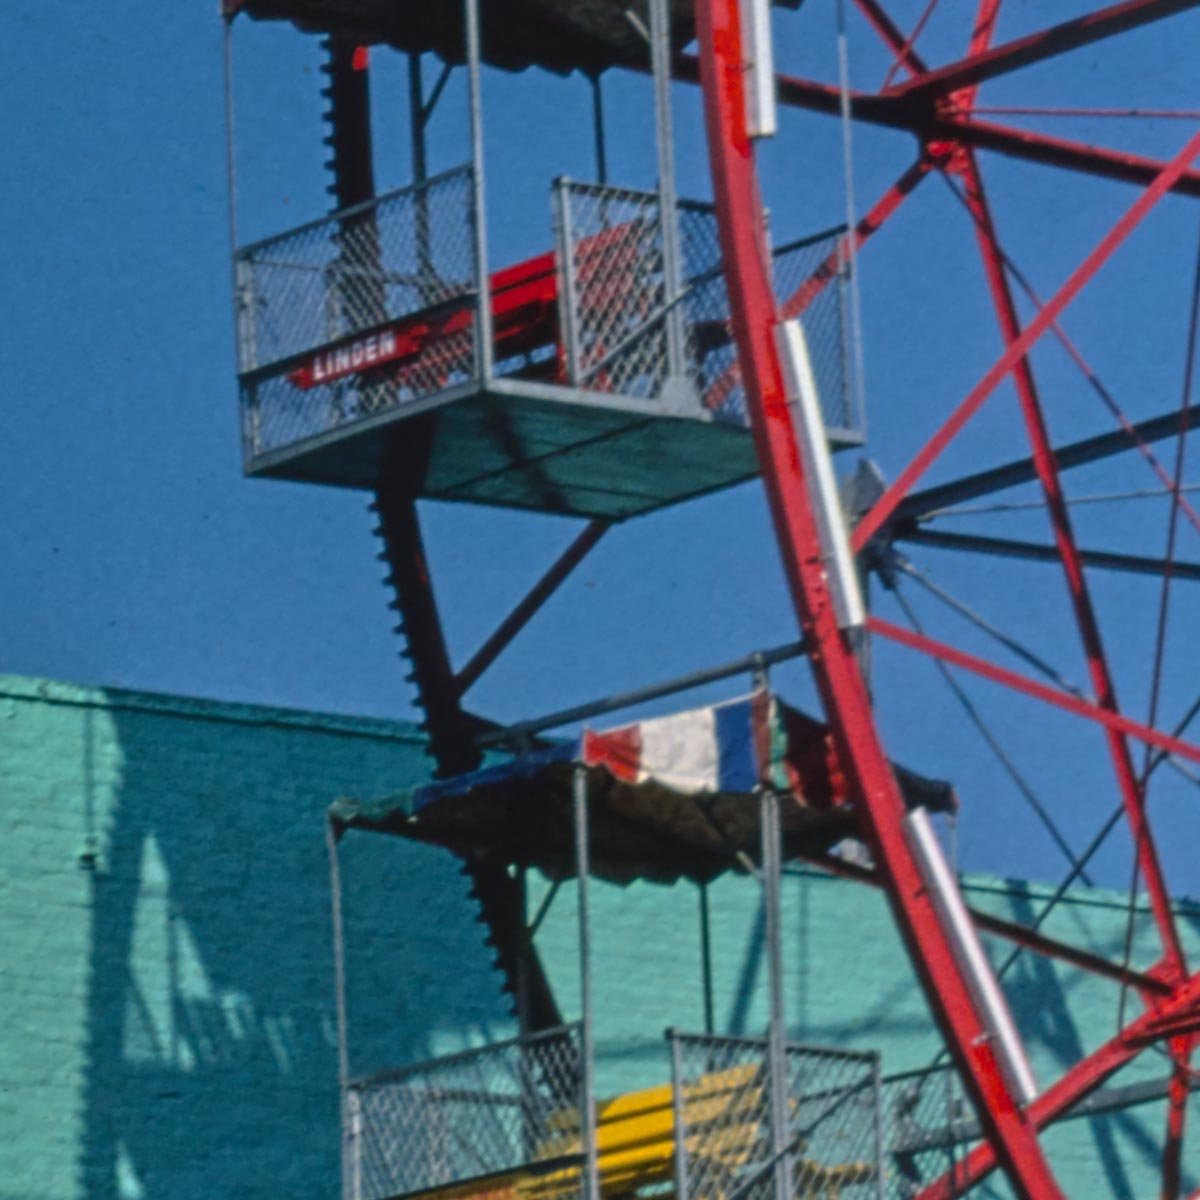 Ferris wheel, Asbury Park, New Jersey by John Margolies